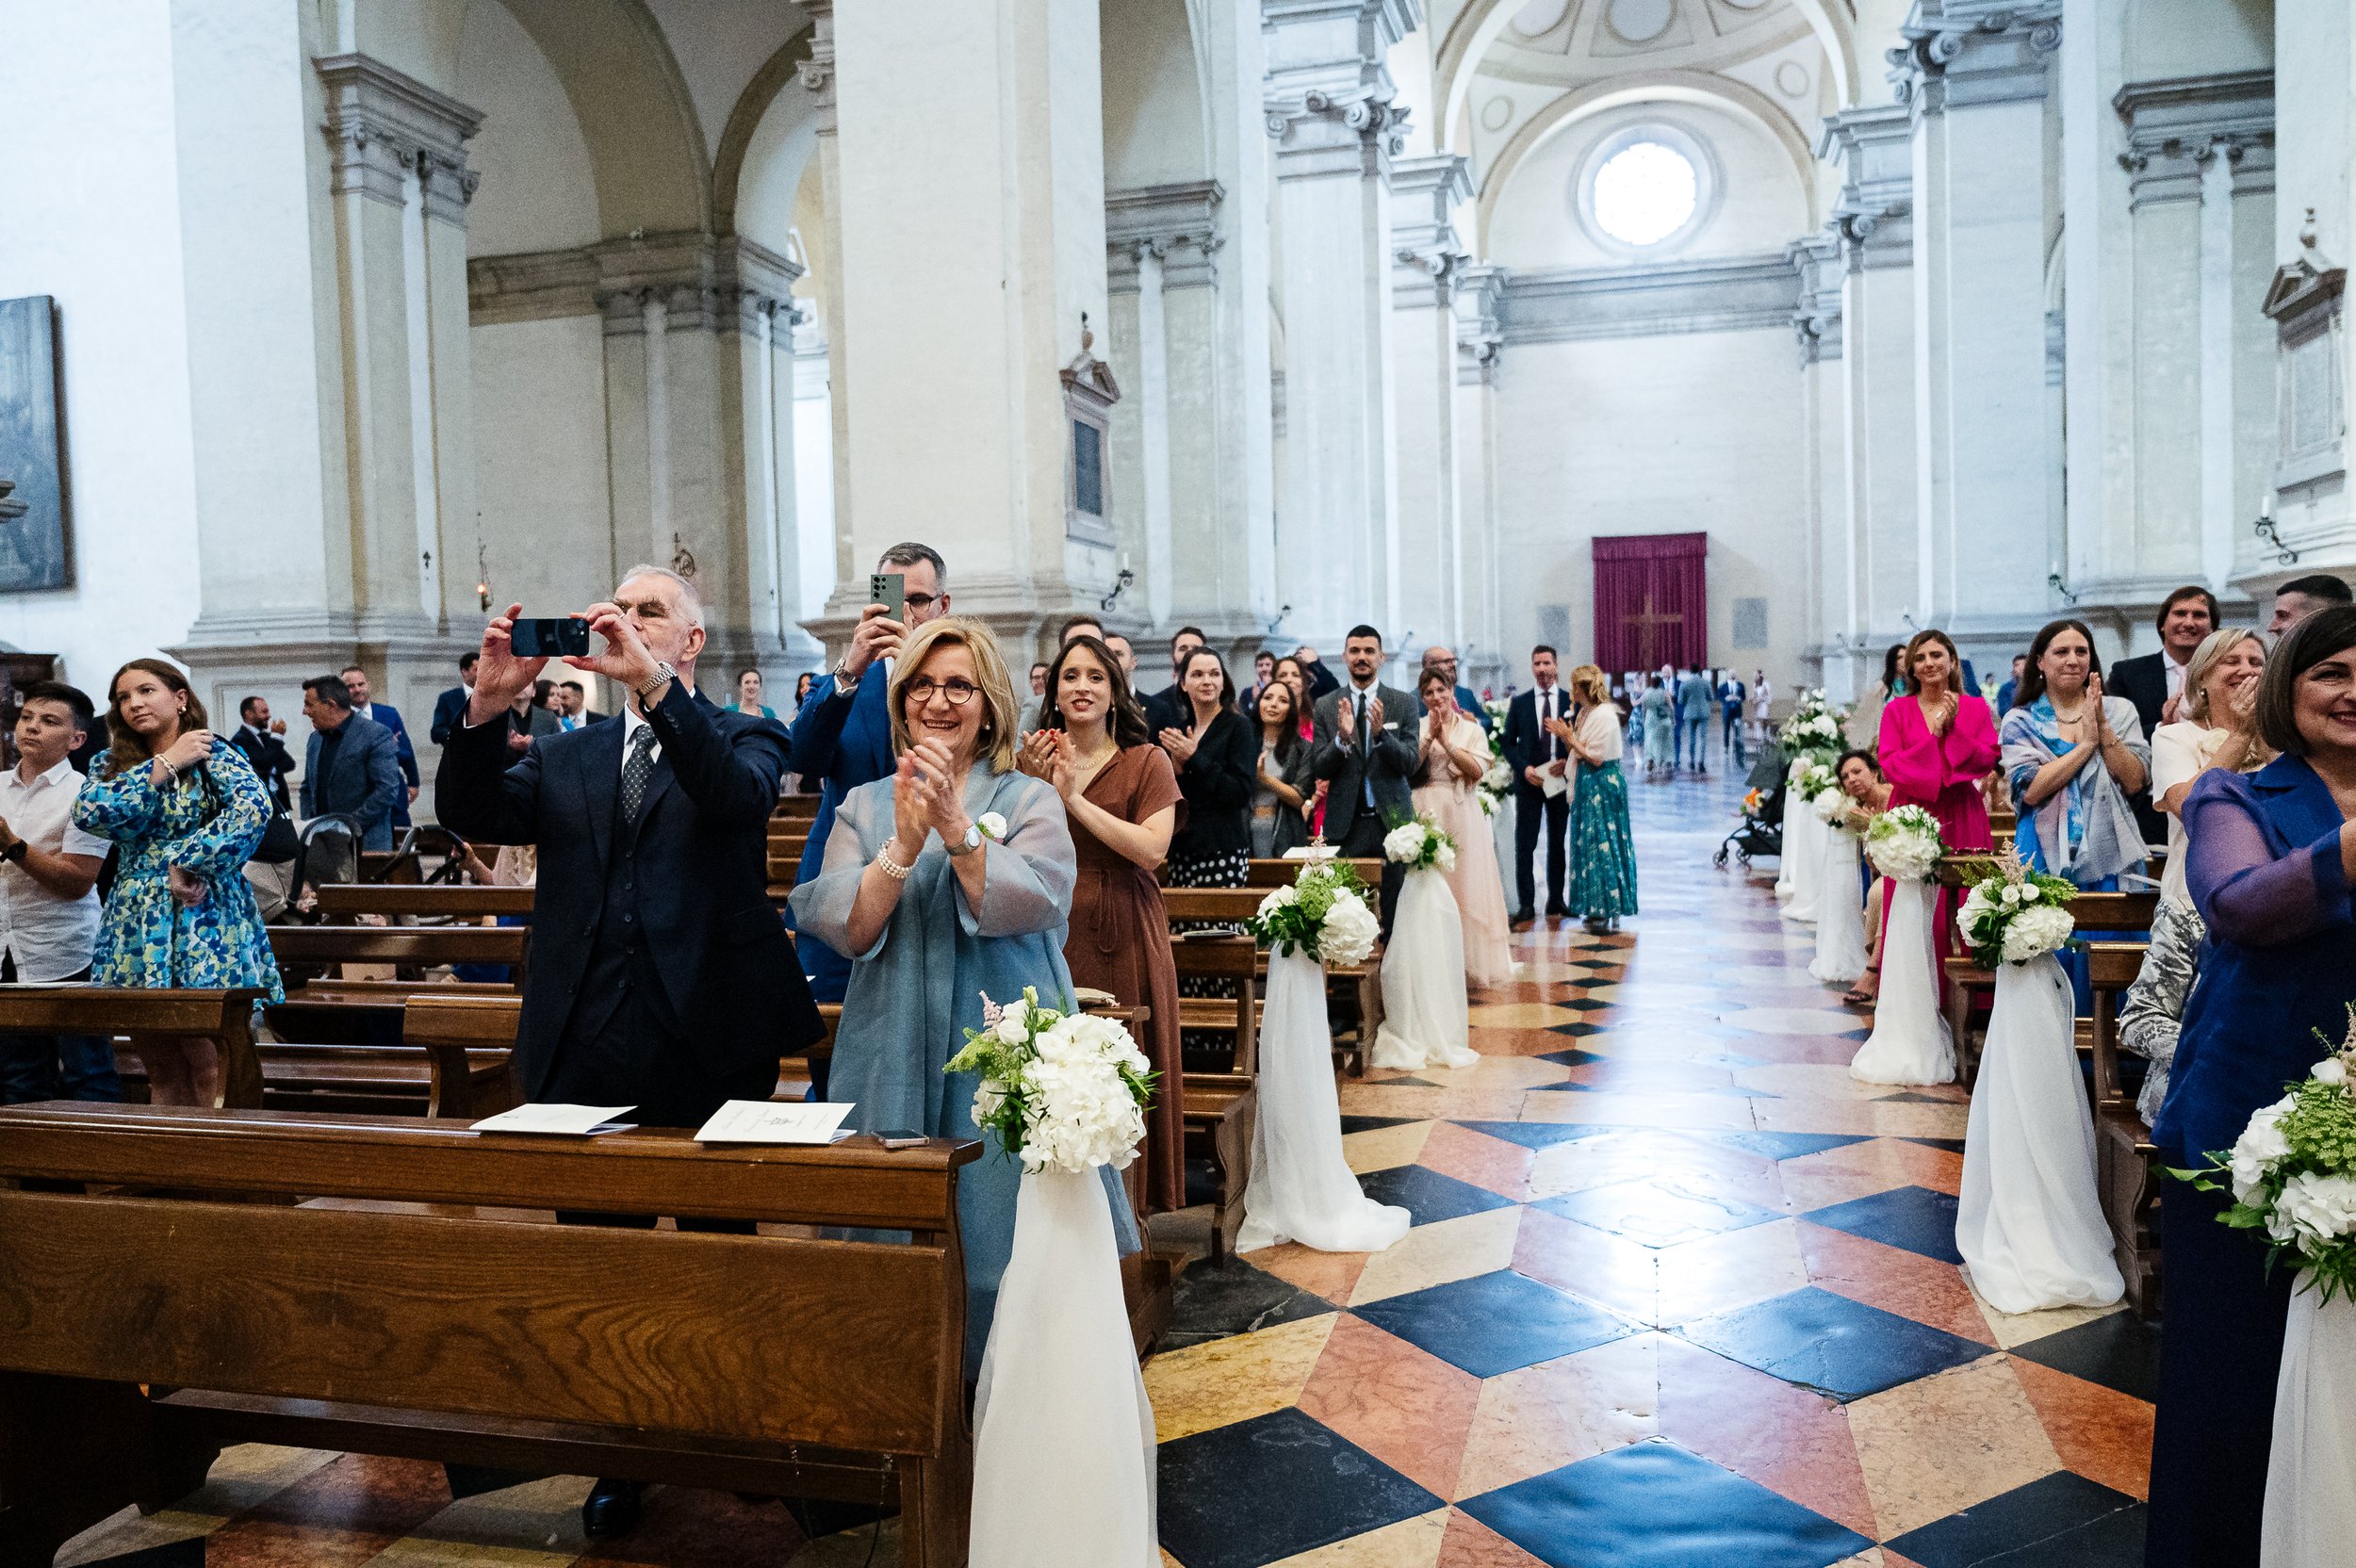 Matrimonio-dominio-bagnoli-Villa-Widman-Borletti-0050.jpg